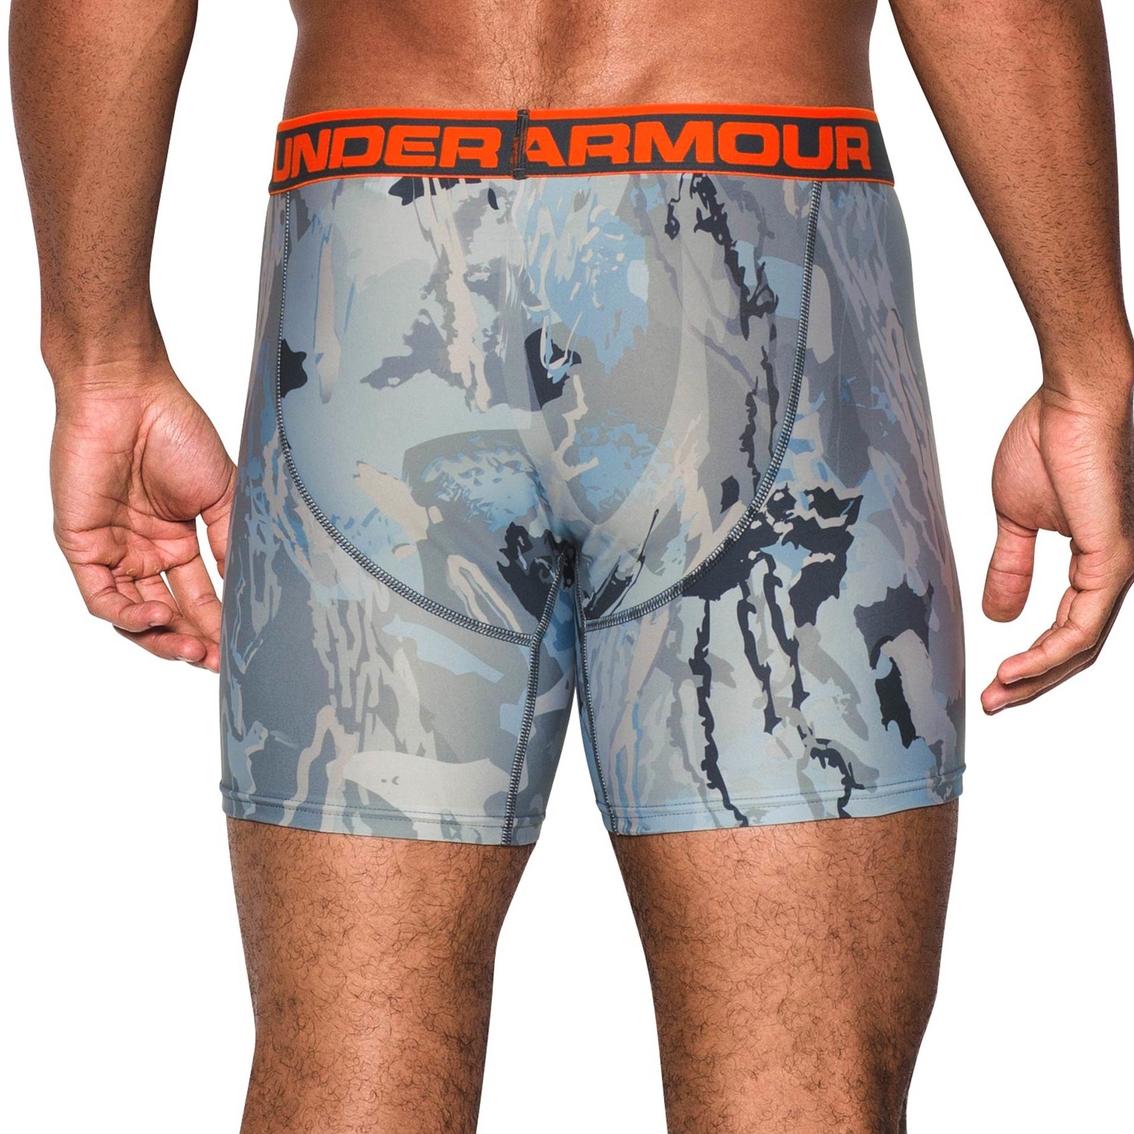 Under Armour Original Series Camo Boxerjock Underwear